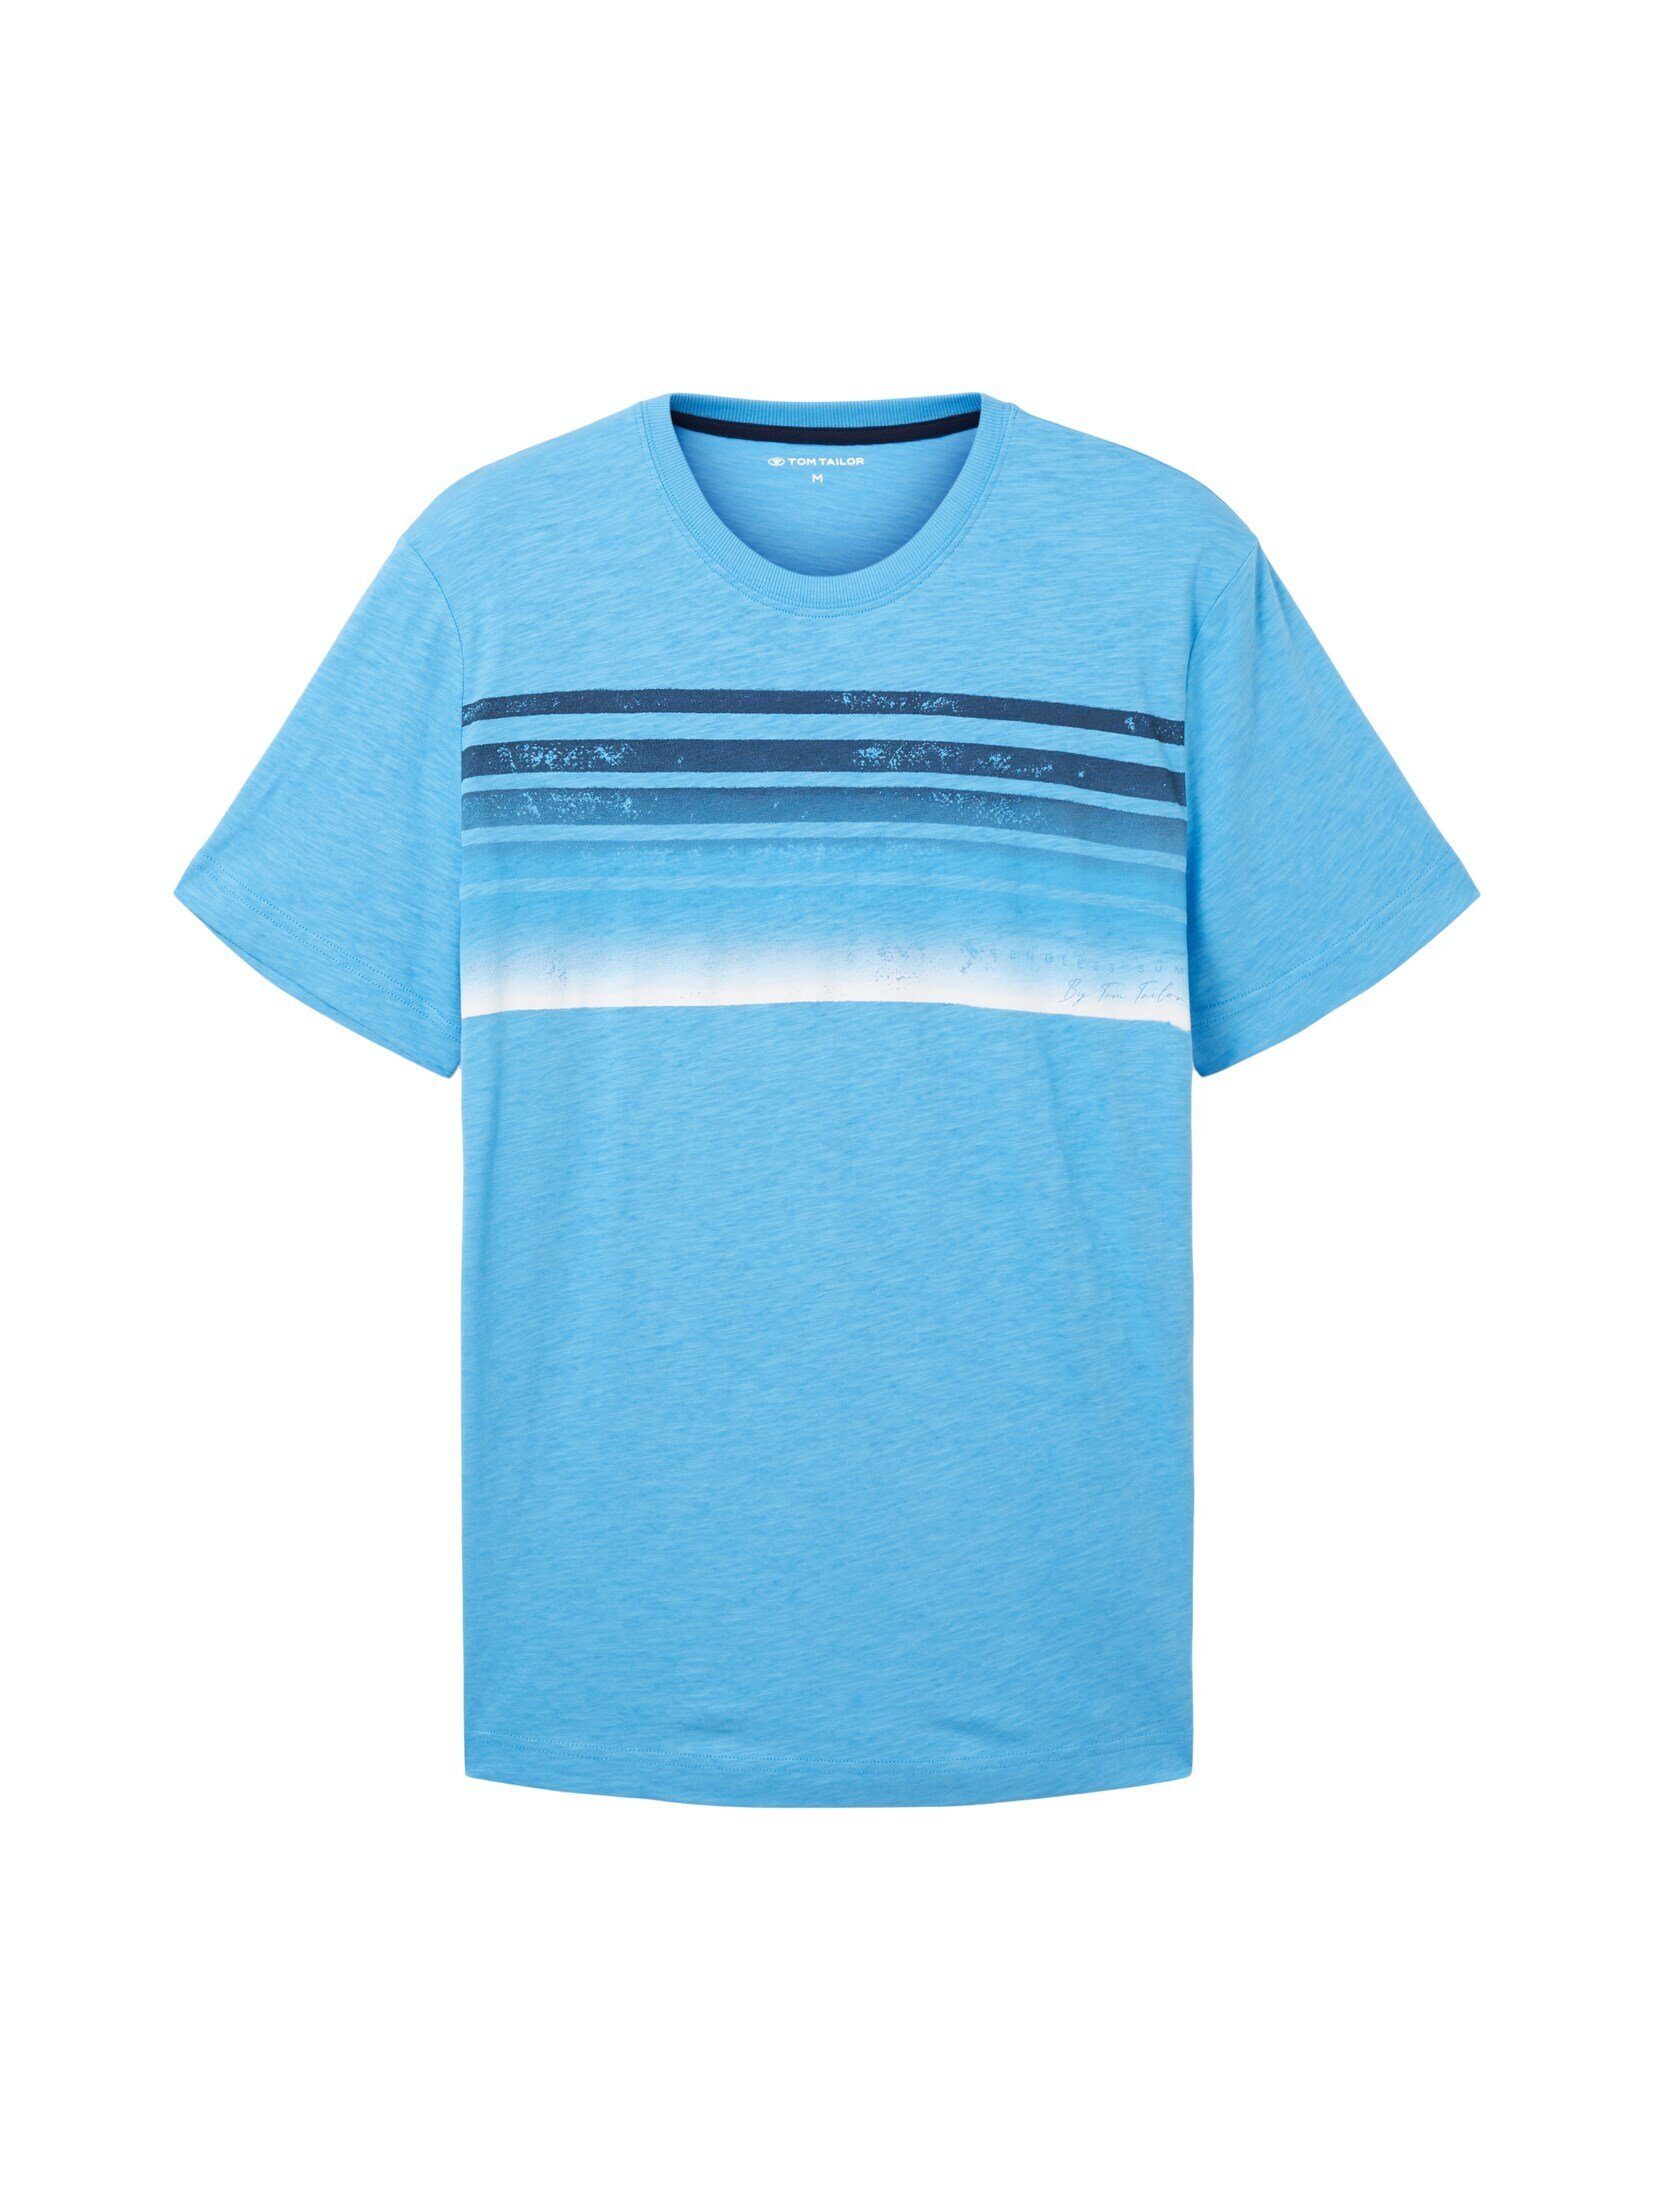 mit Print TAILOR T-Shirt blue sky TOM T-Shirt rainy